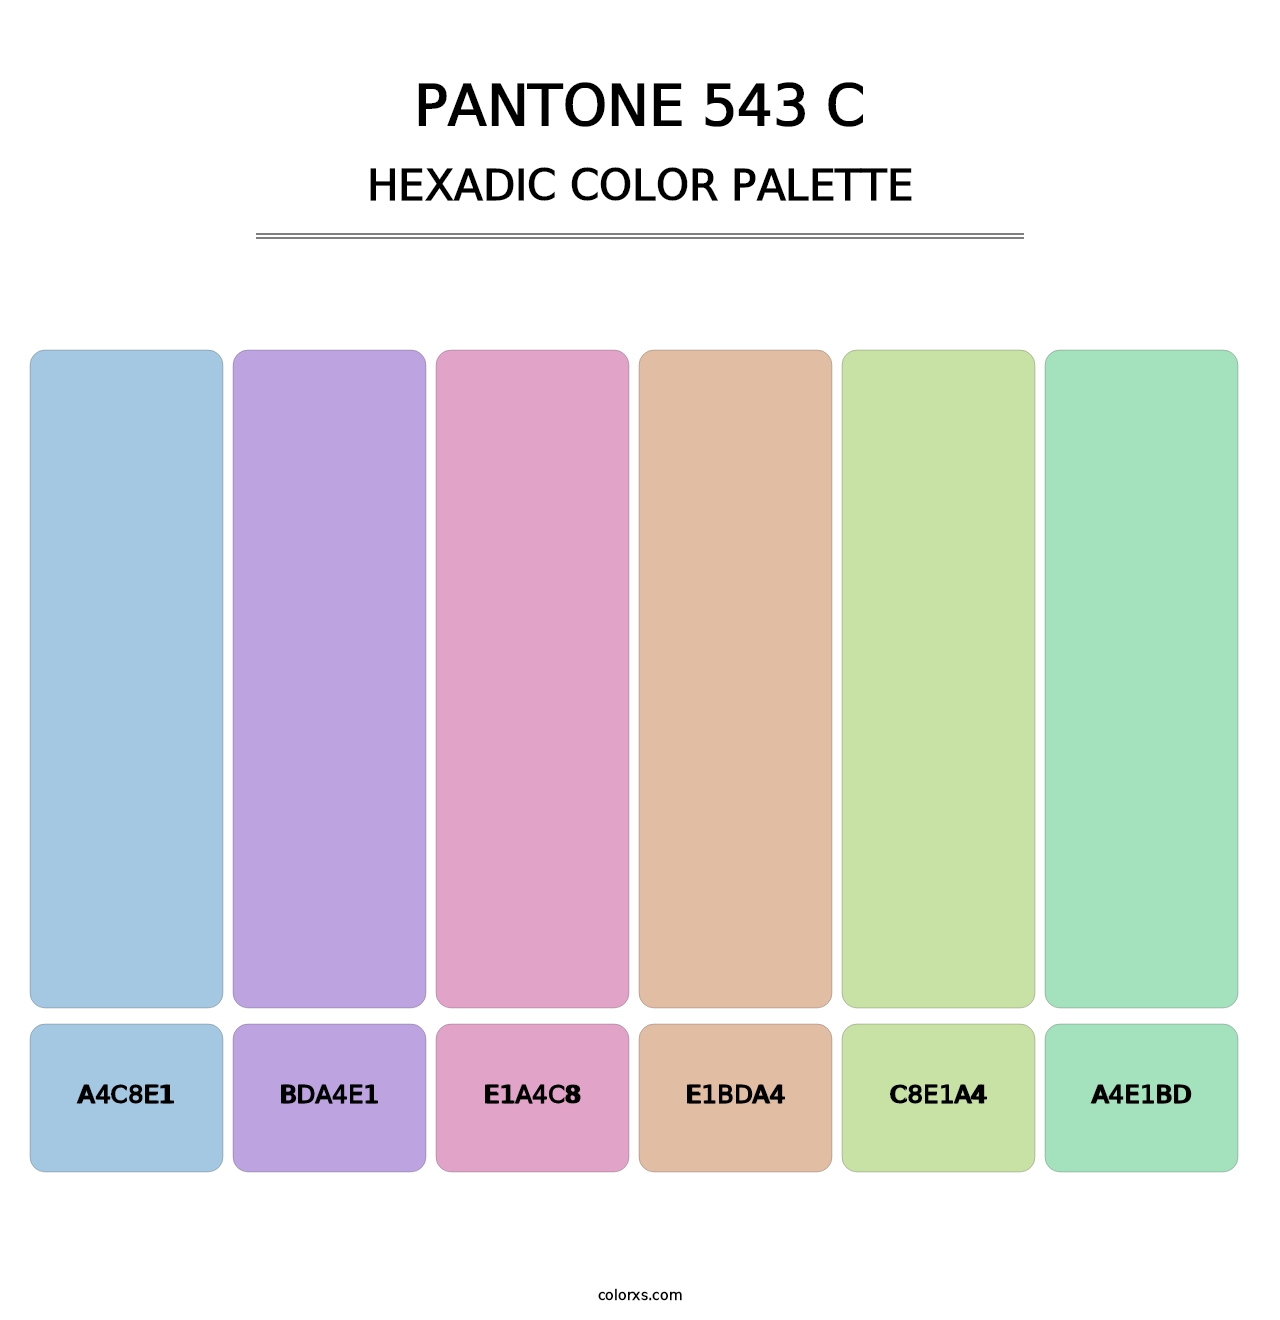 PANTONE 543 C - Hexadic Color Palette